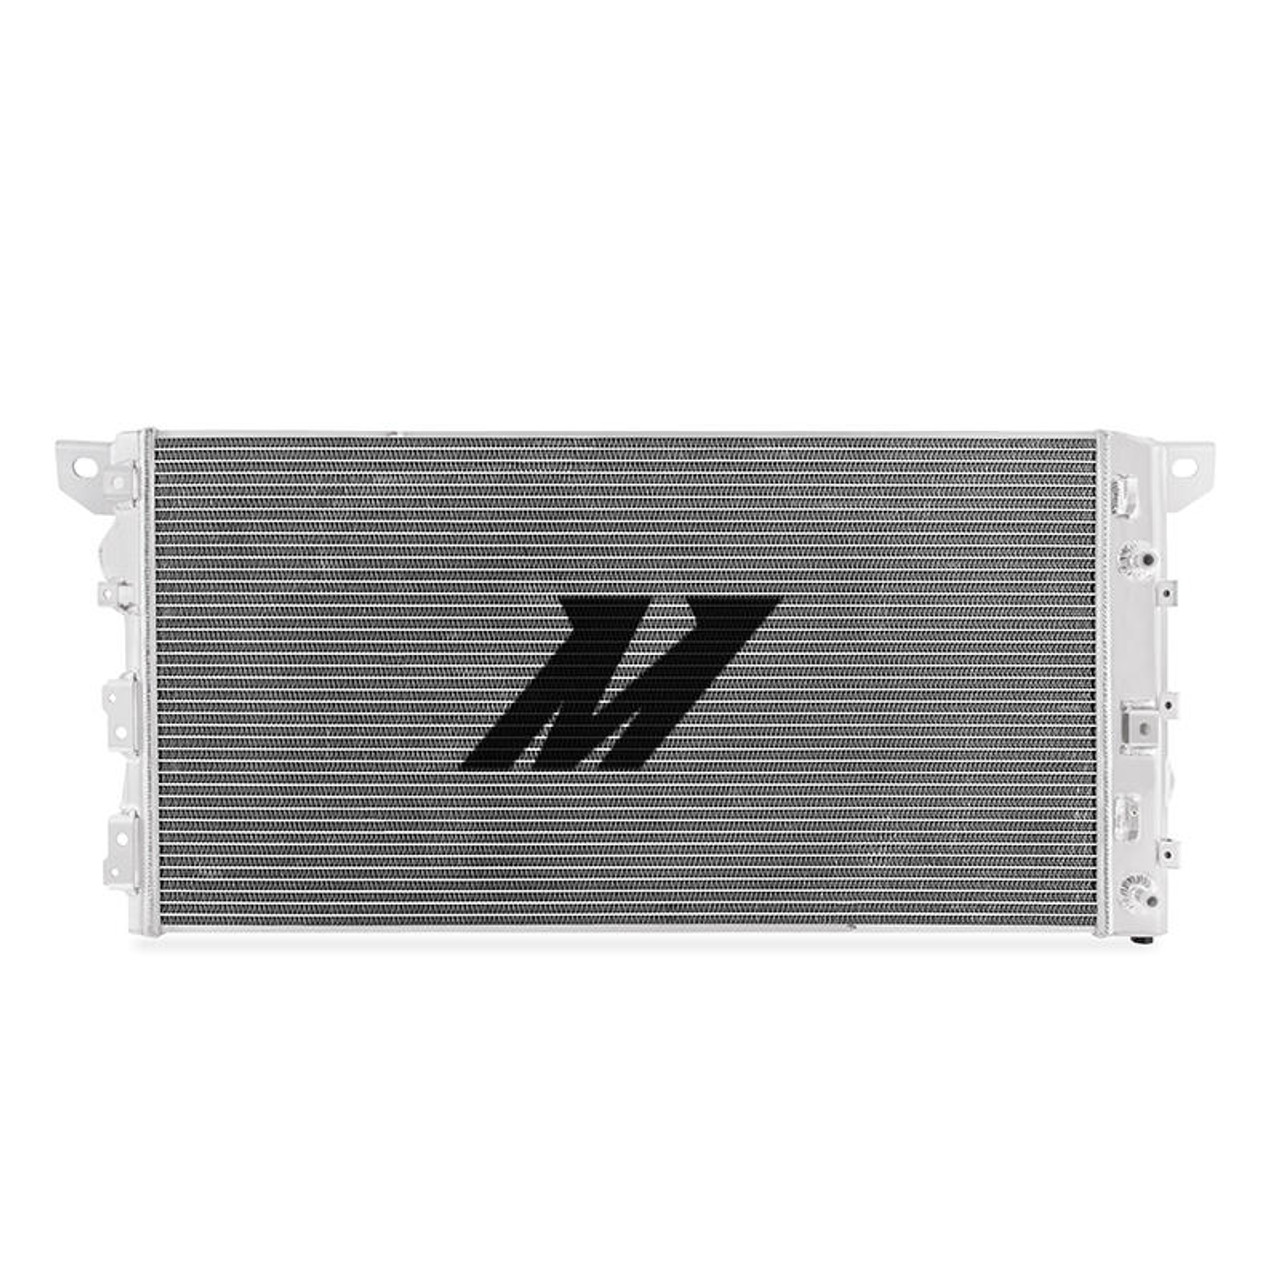 Mishimoto 2015 Ford F-150 Performance Aluminum Radiator - MMRAD-F150-15